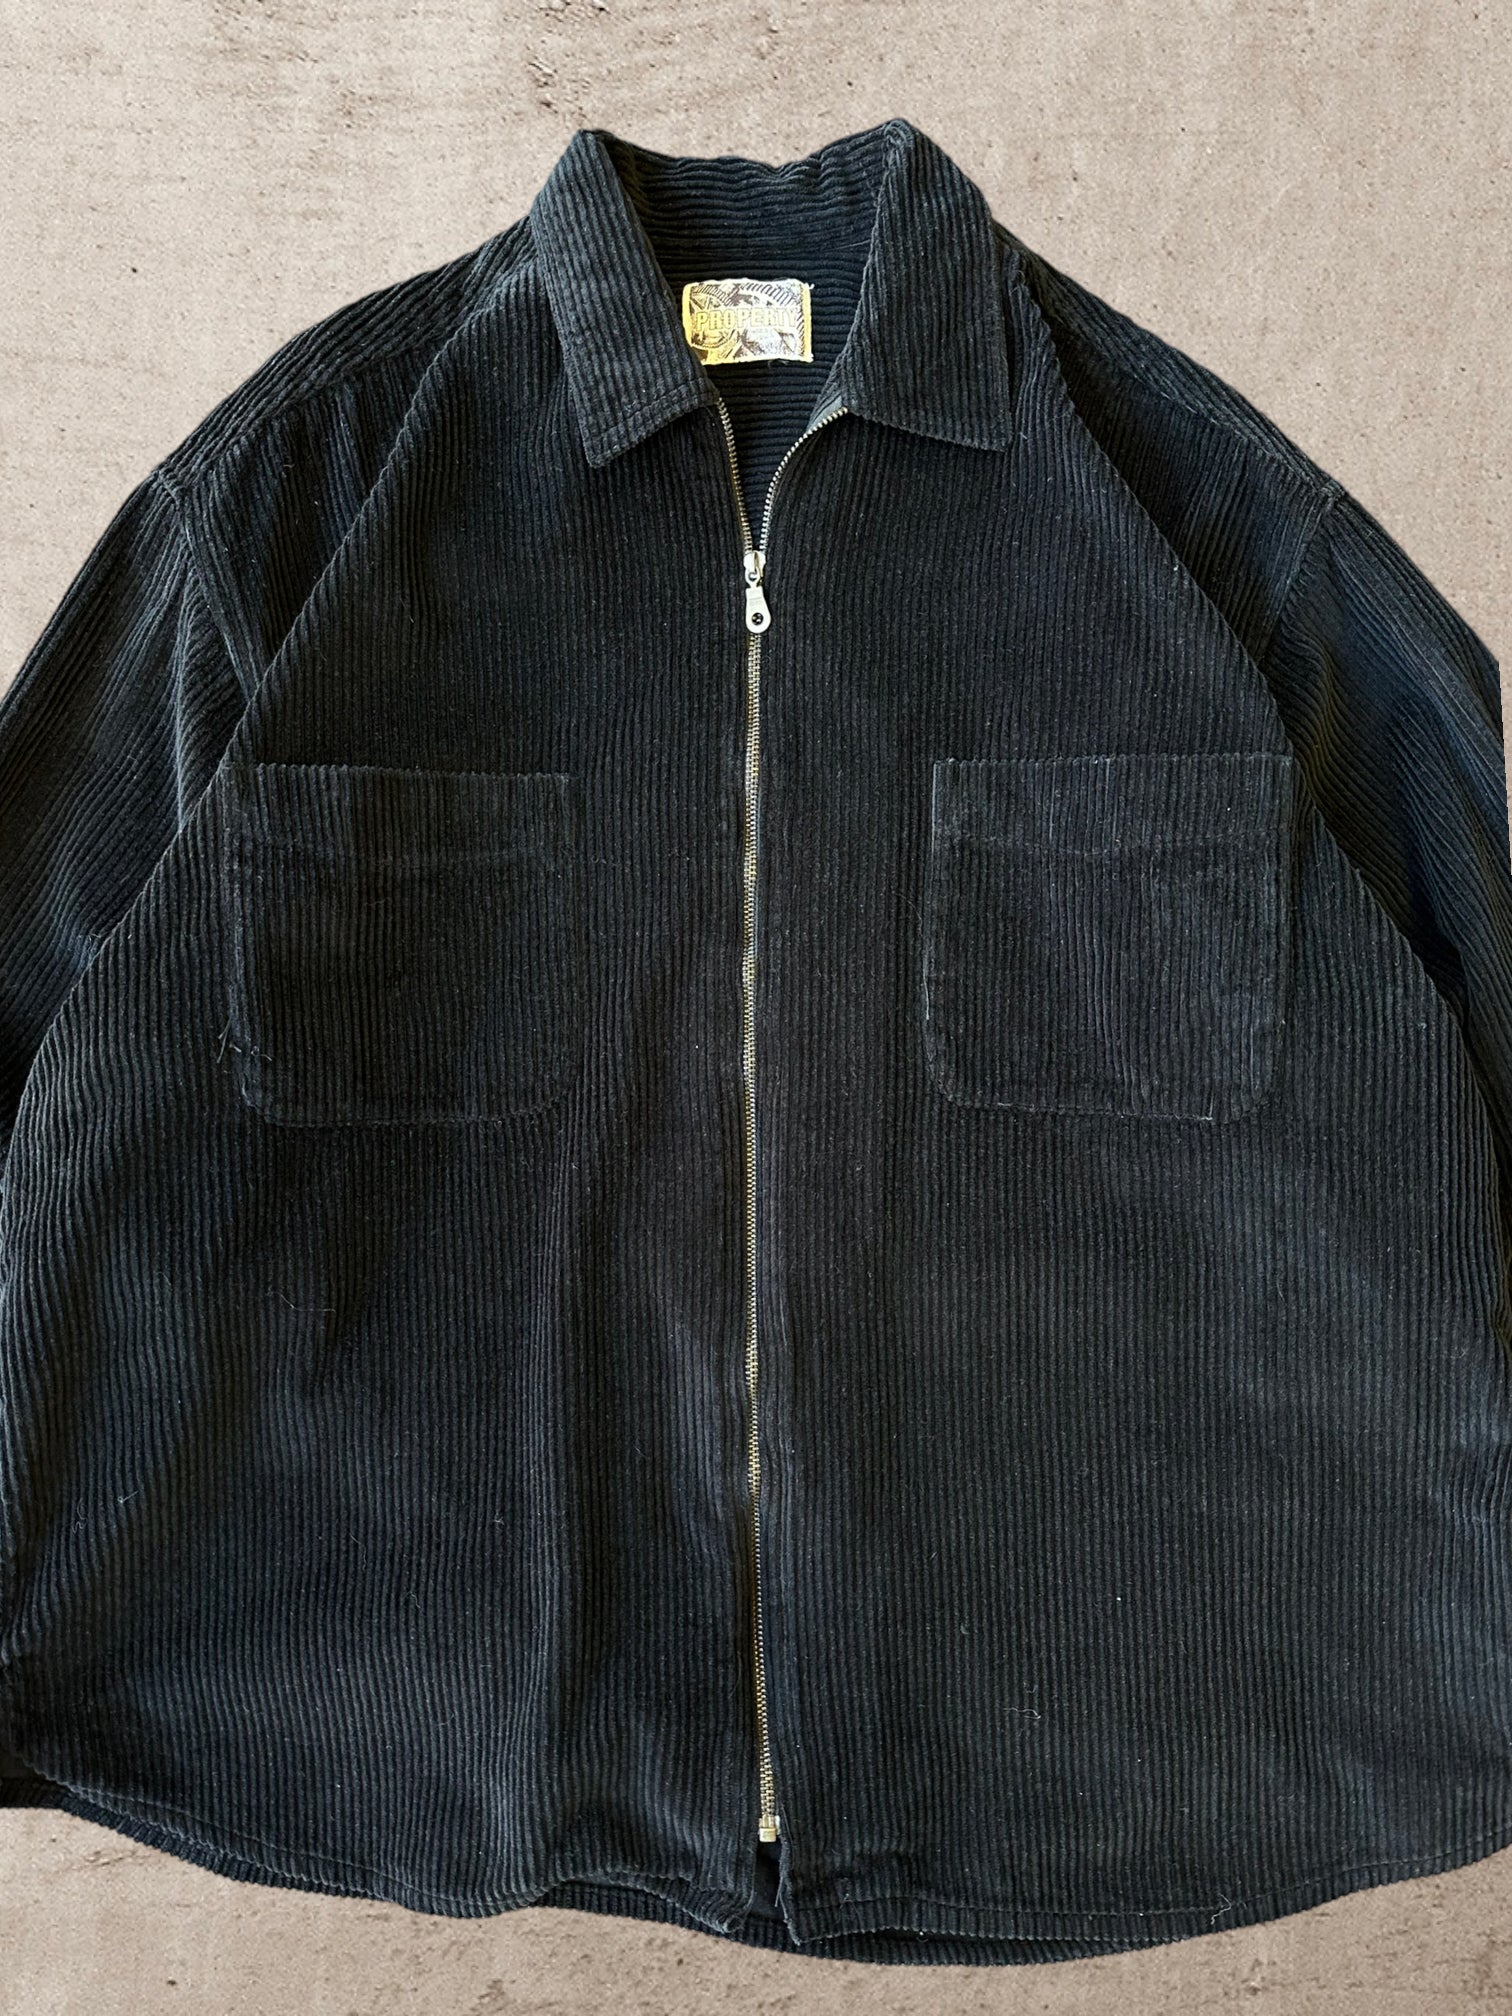 90s Property Black Corduroy Zip Up Jacket - XL